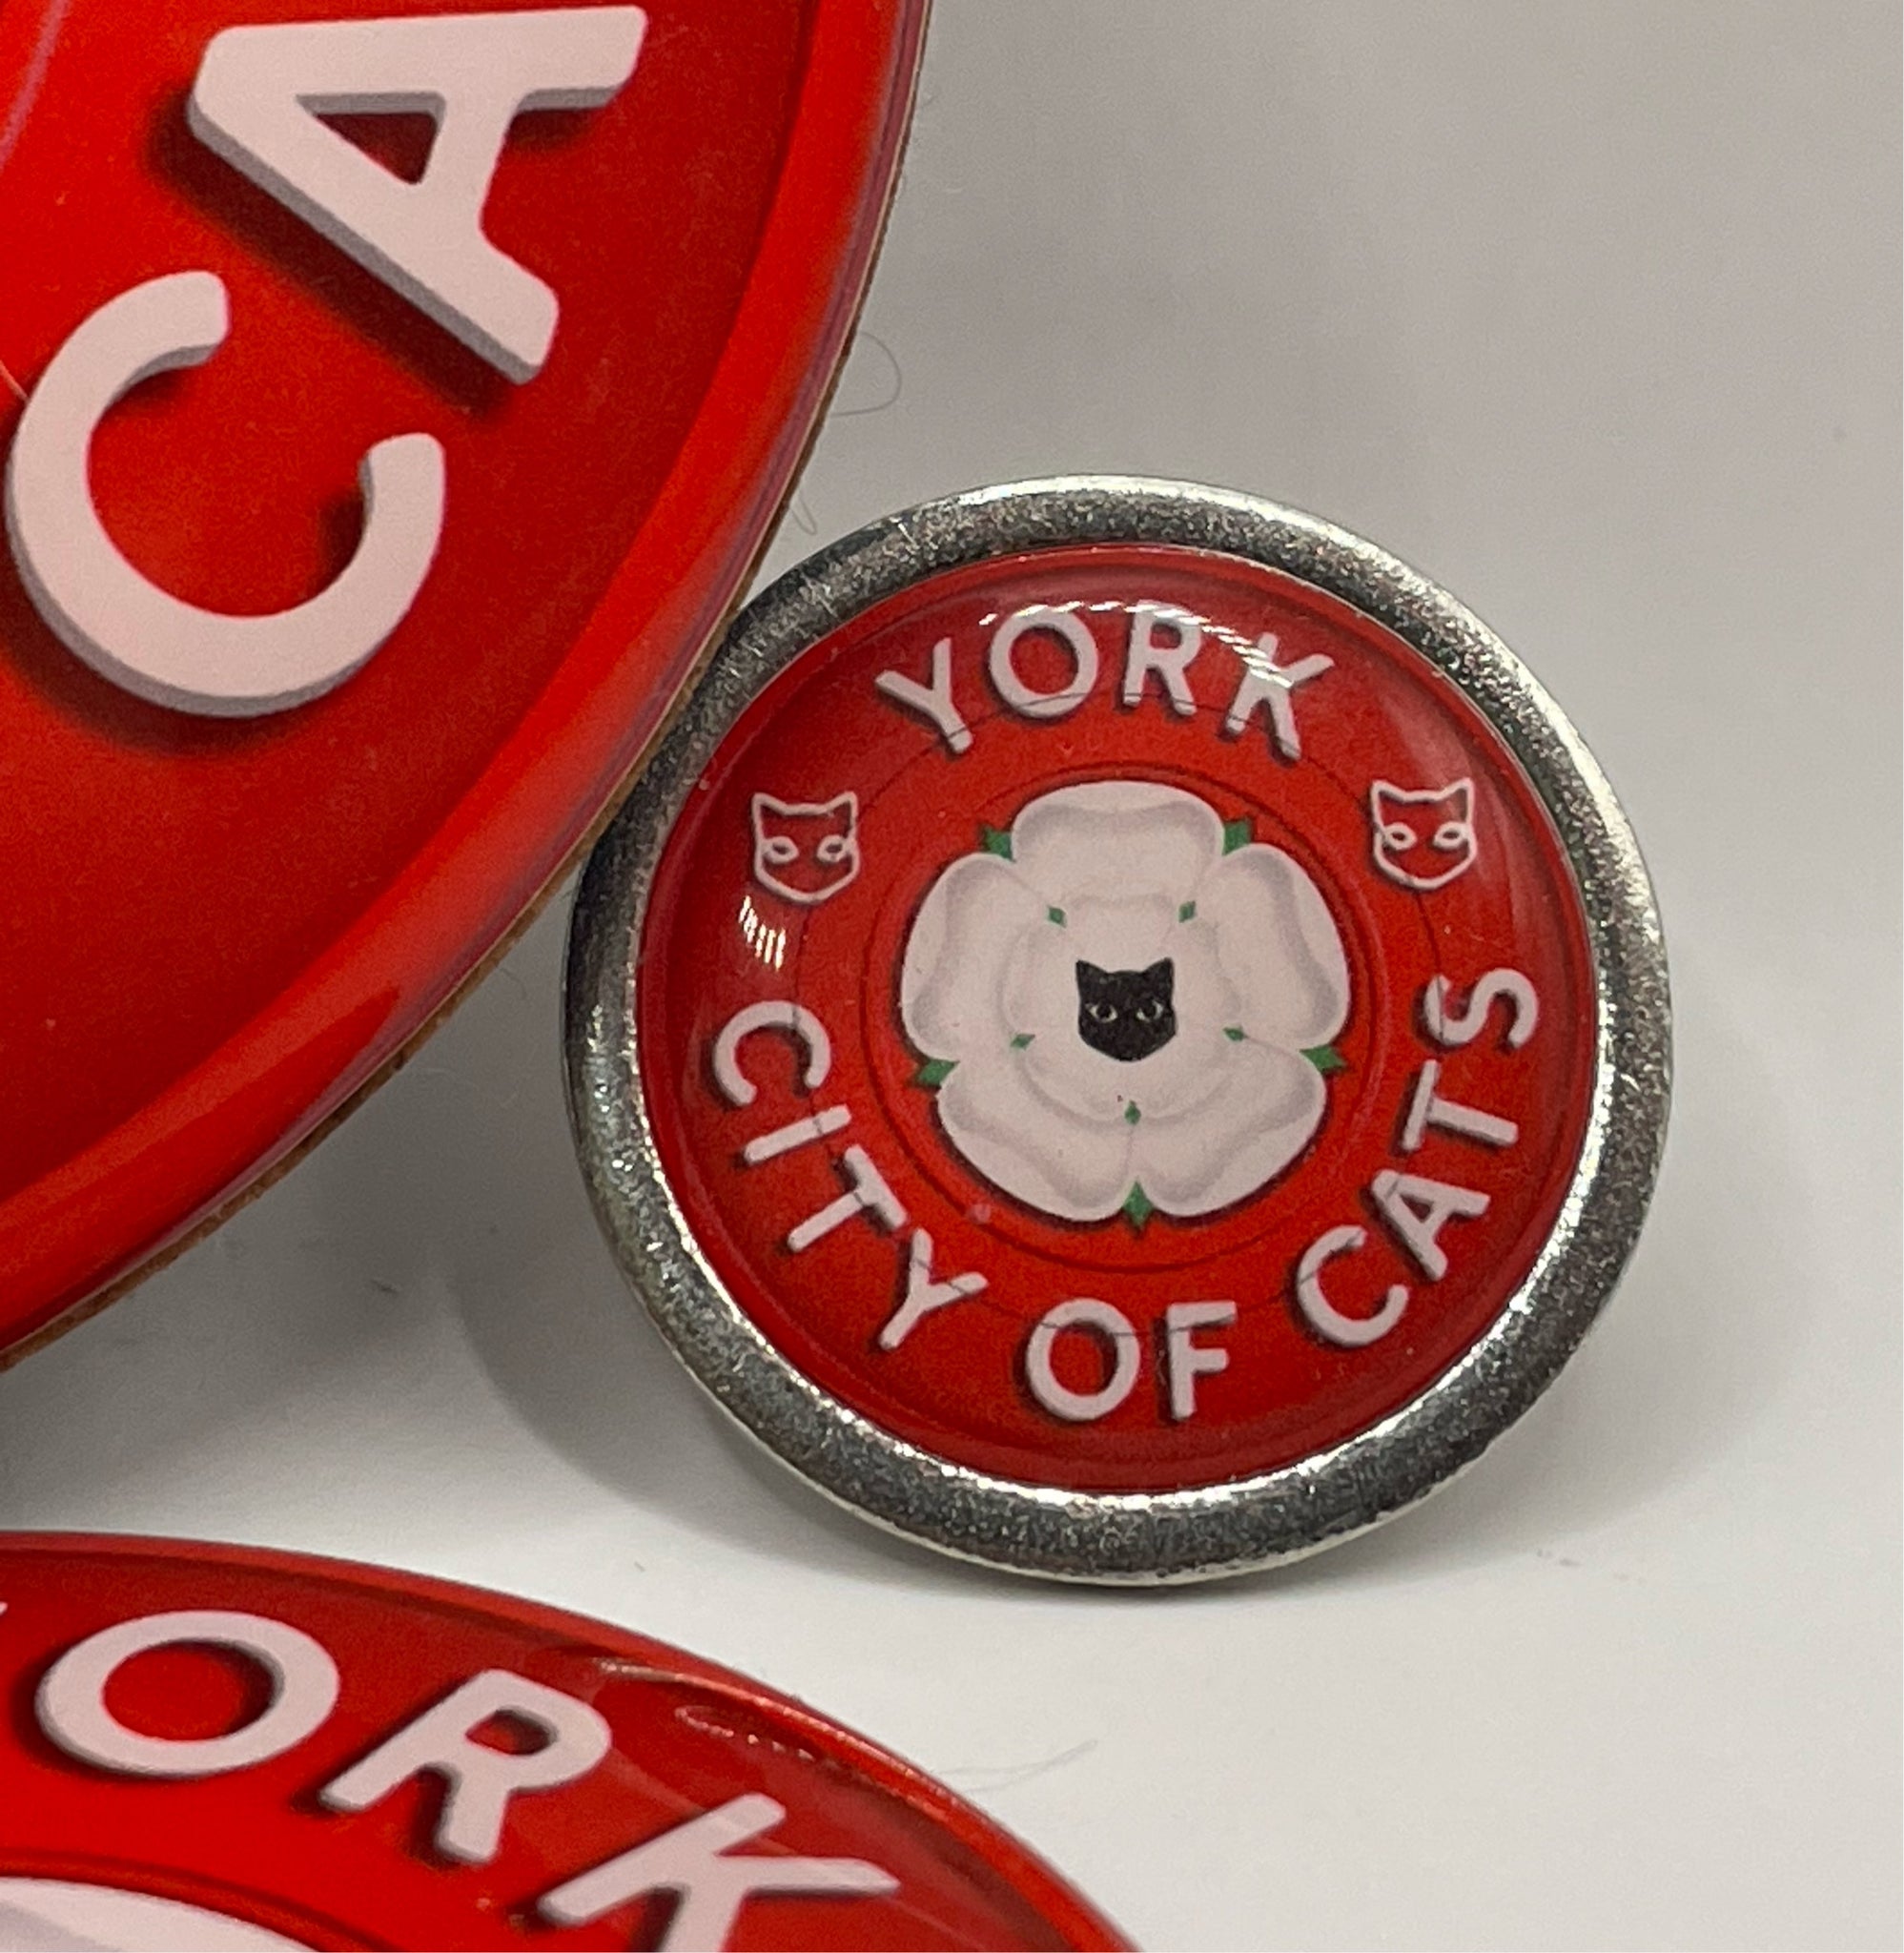 York City of Cats Badge